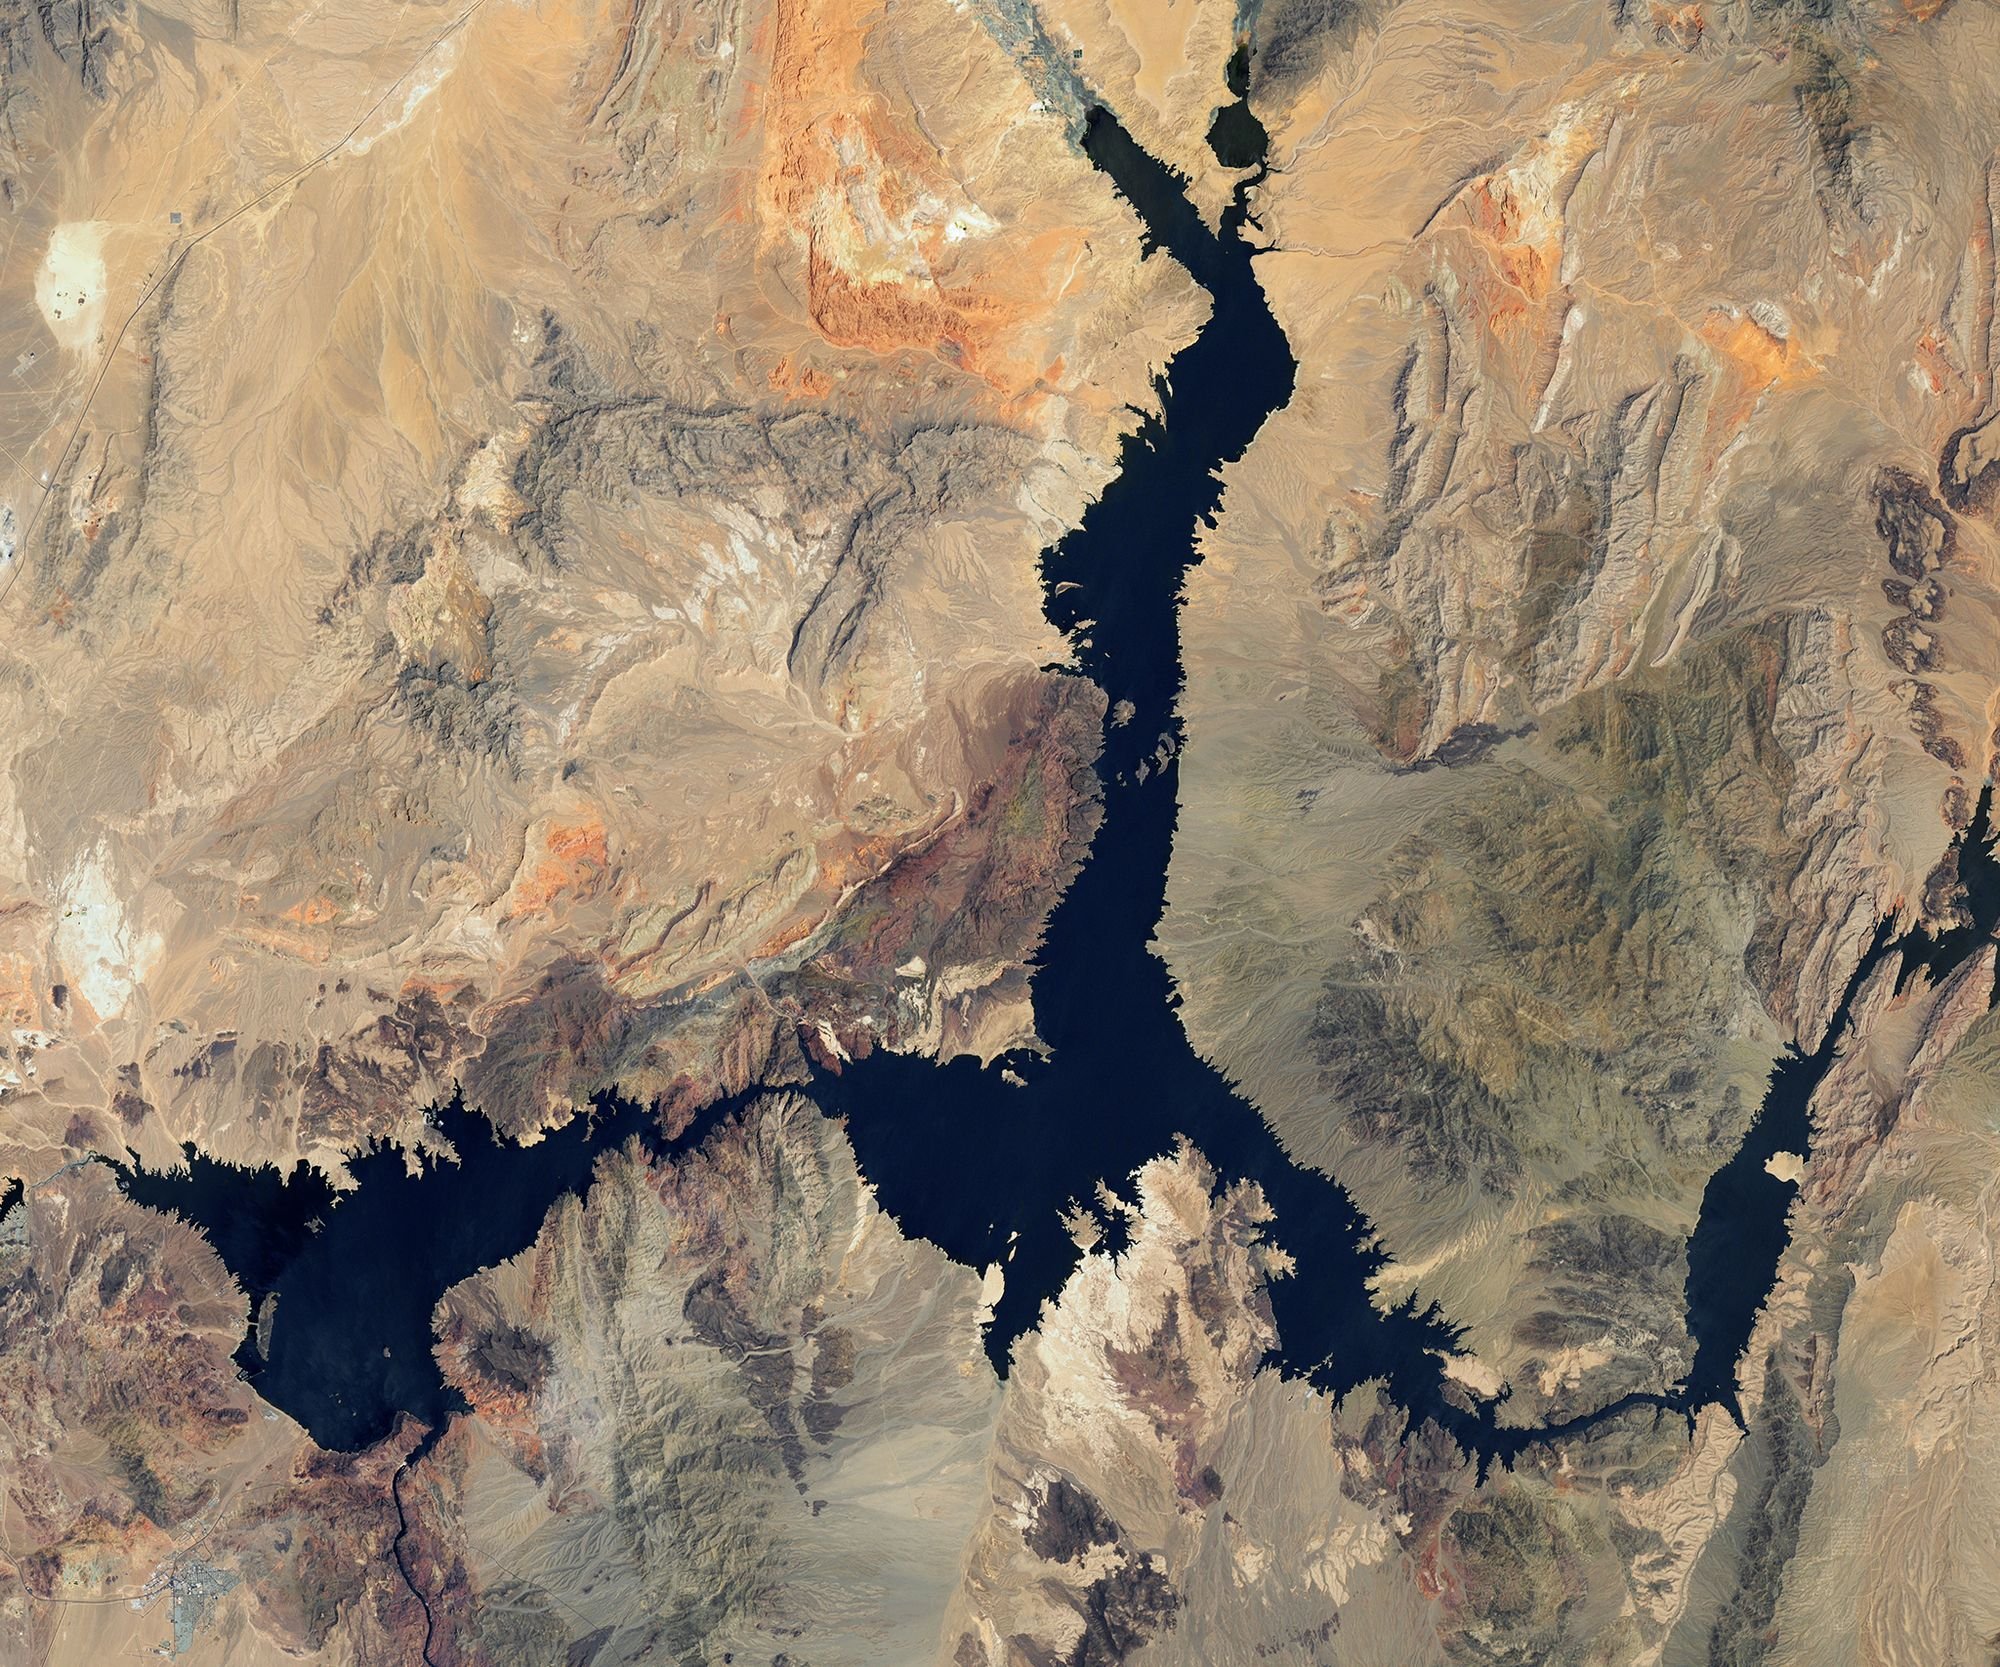 Disappearing Lake Mead, Nevada-Arizona Border